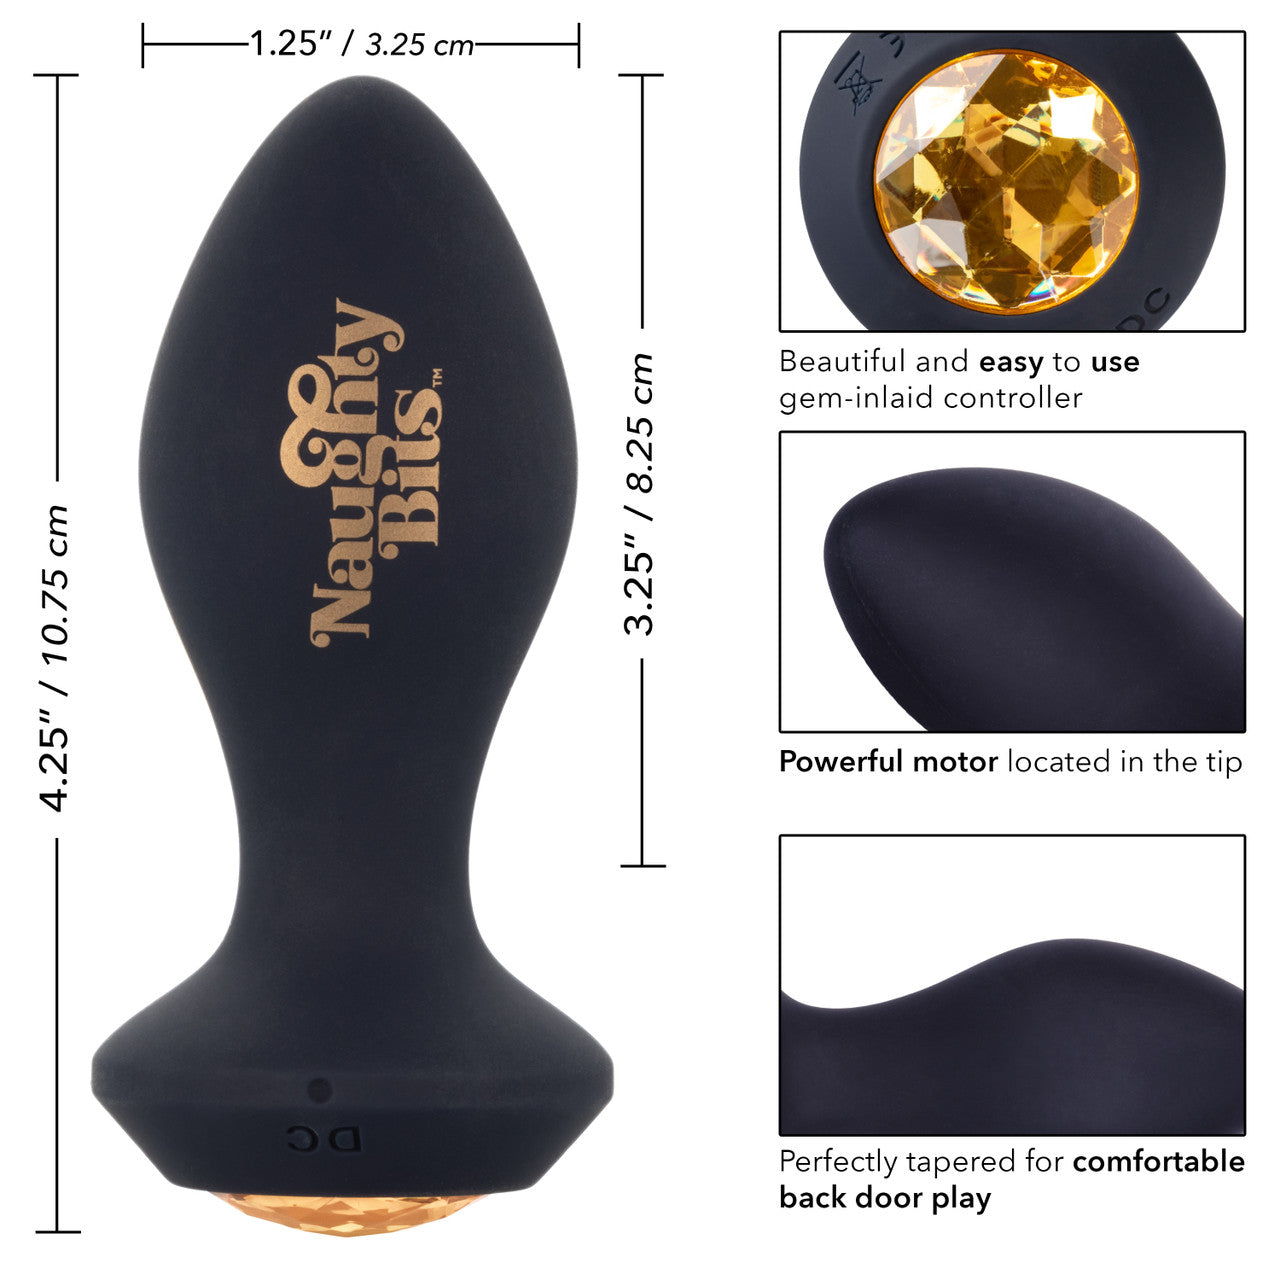 Naughty Bits Shake Your Ass Petite Vibrating Butt Plug-T&F 3YRS Anniversary Sale